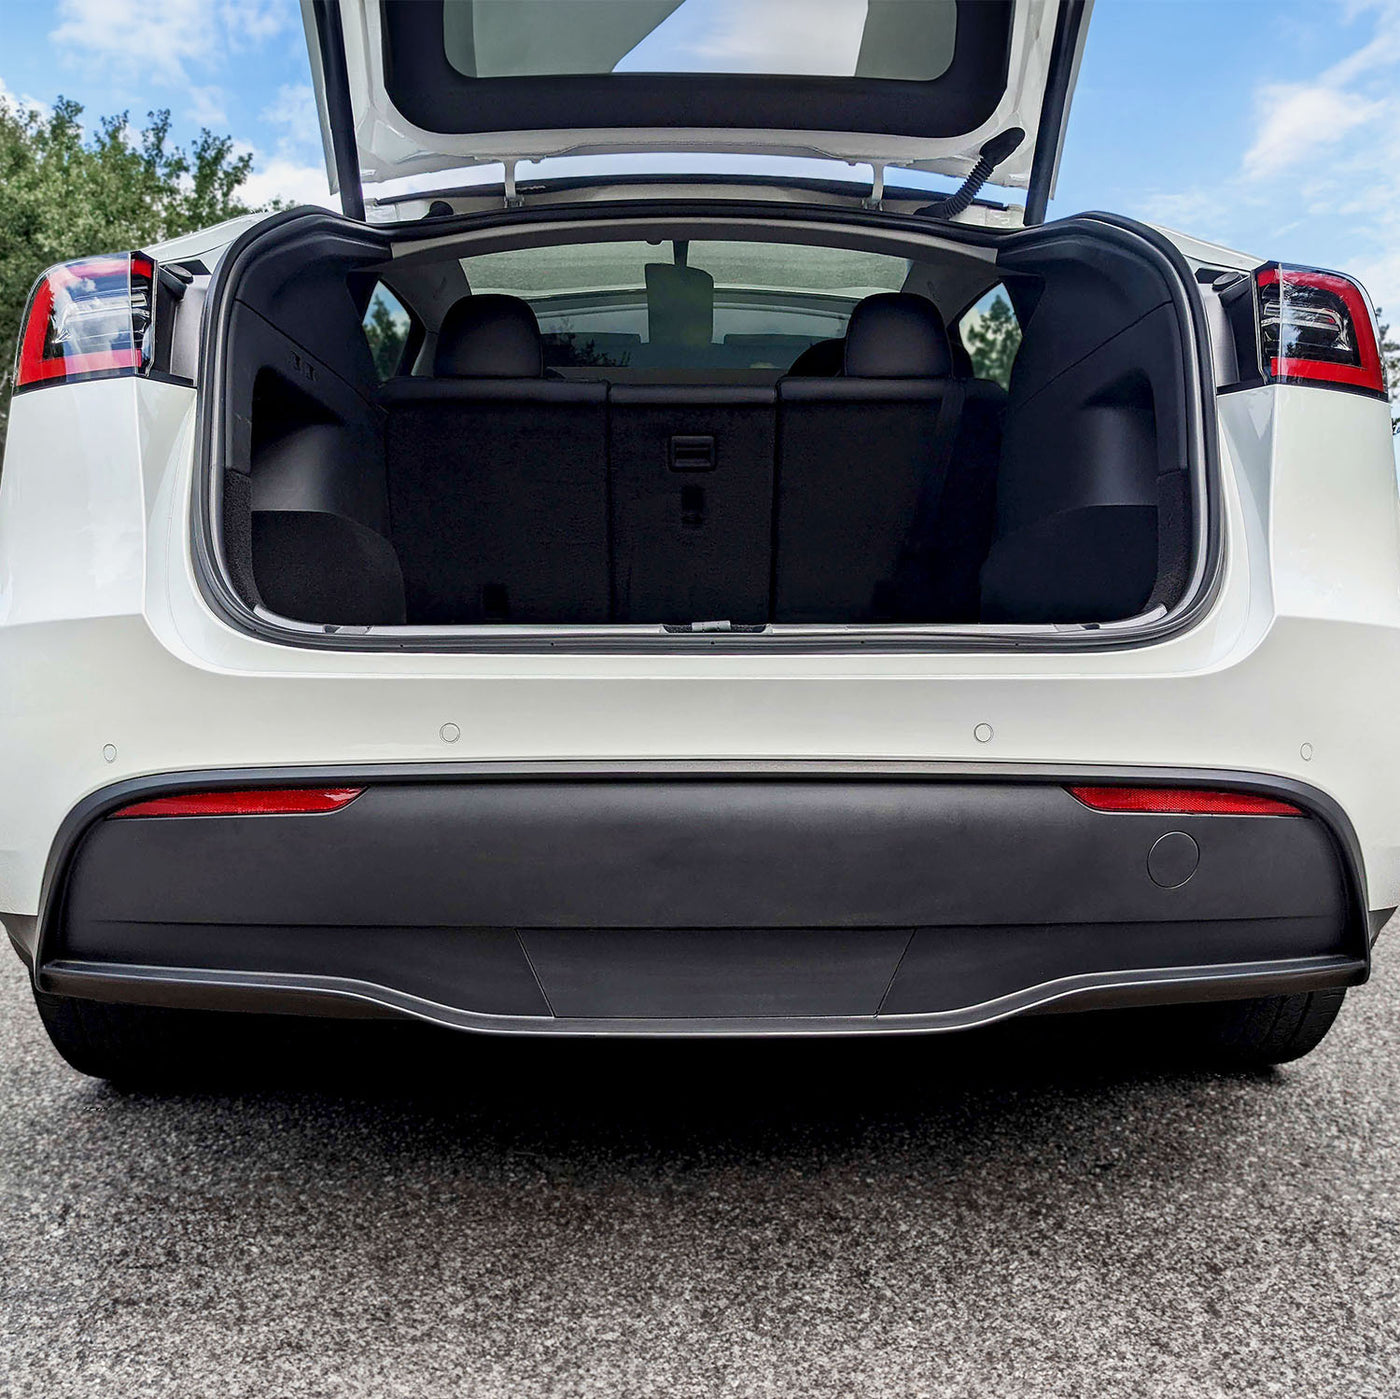 model y trunk bumper protector #ultrasonic-sensors-on-bumper_my-vehicle-has-sensors